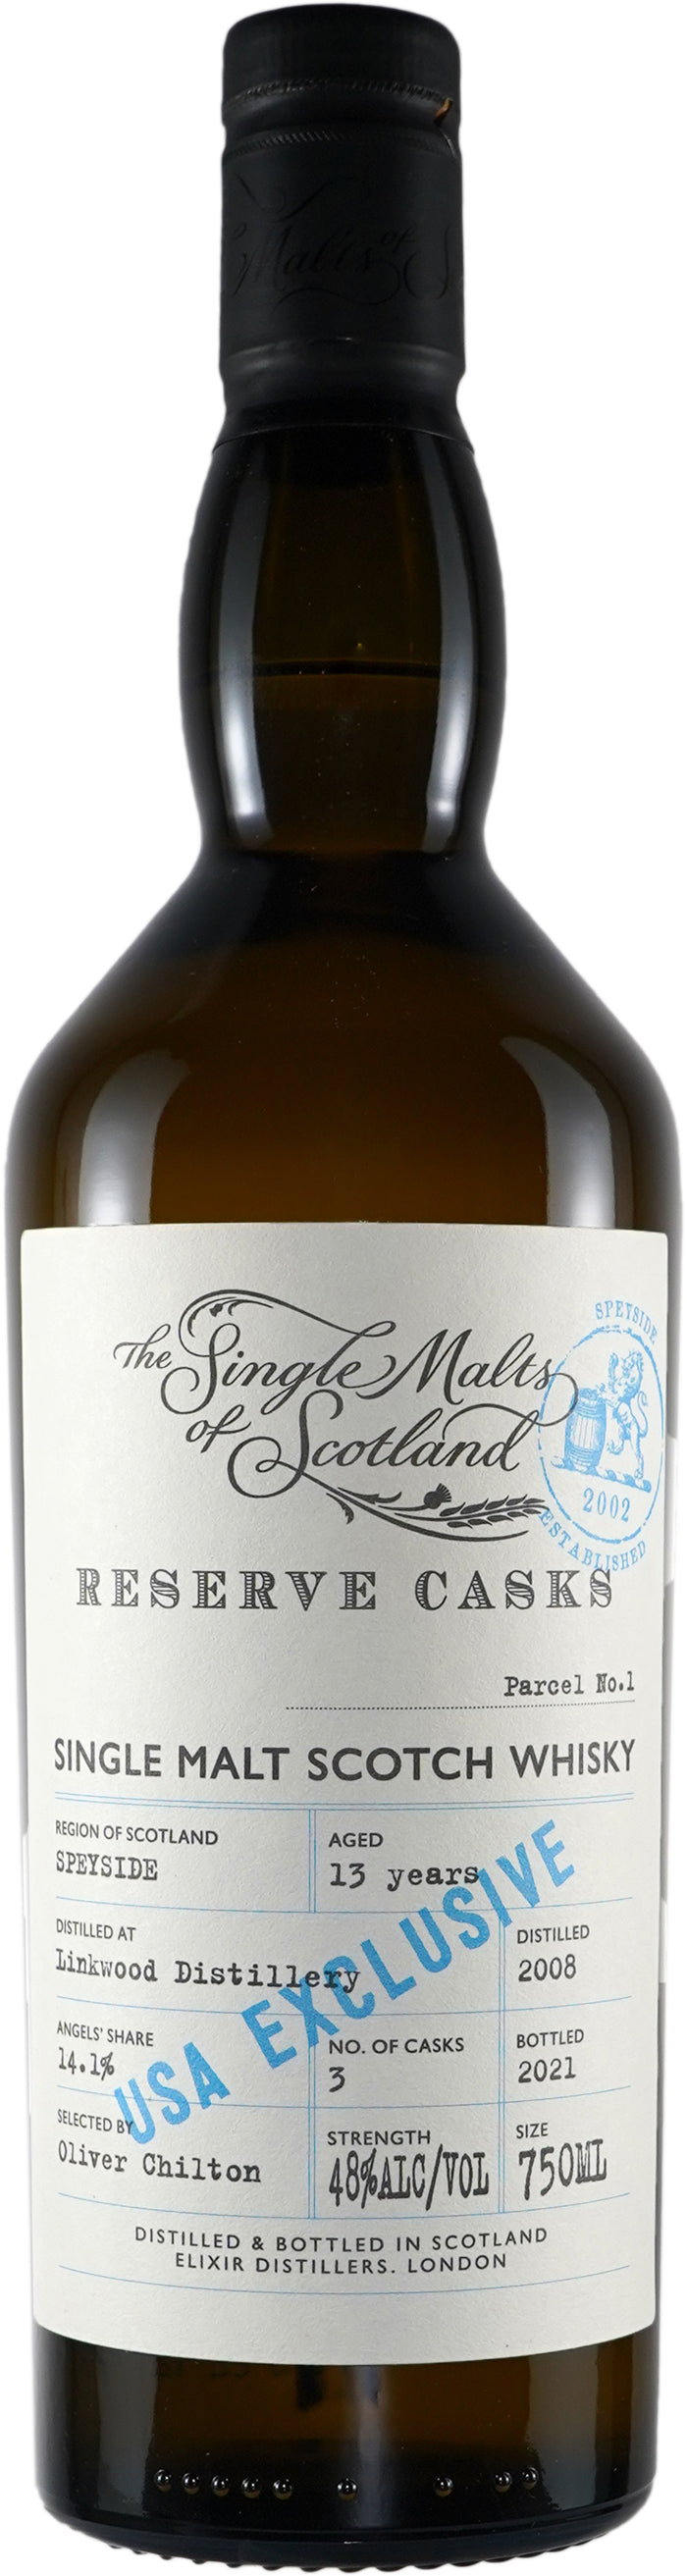 The Single Malts of Scotland Linkwood 13 Year Old Reserve Casks Scotch Whisky